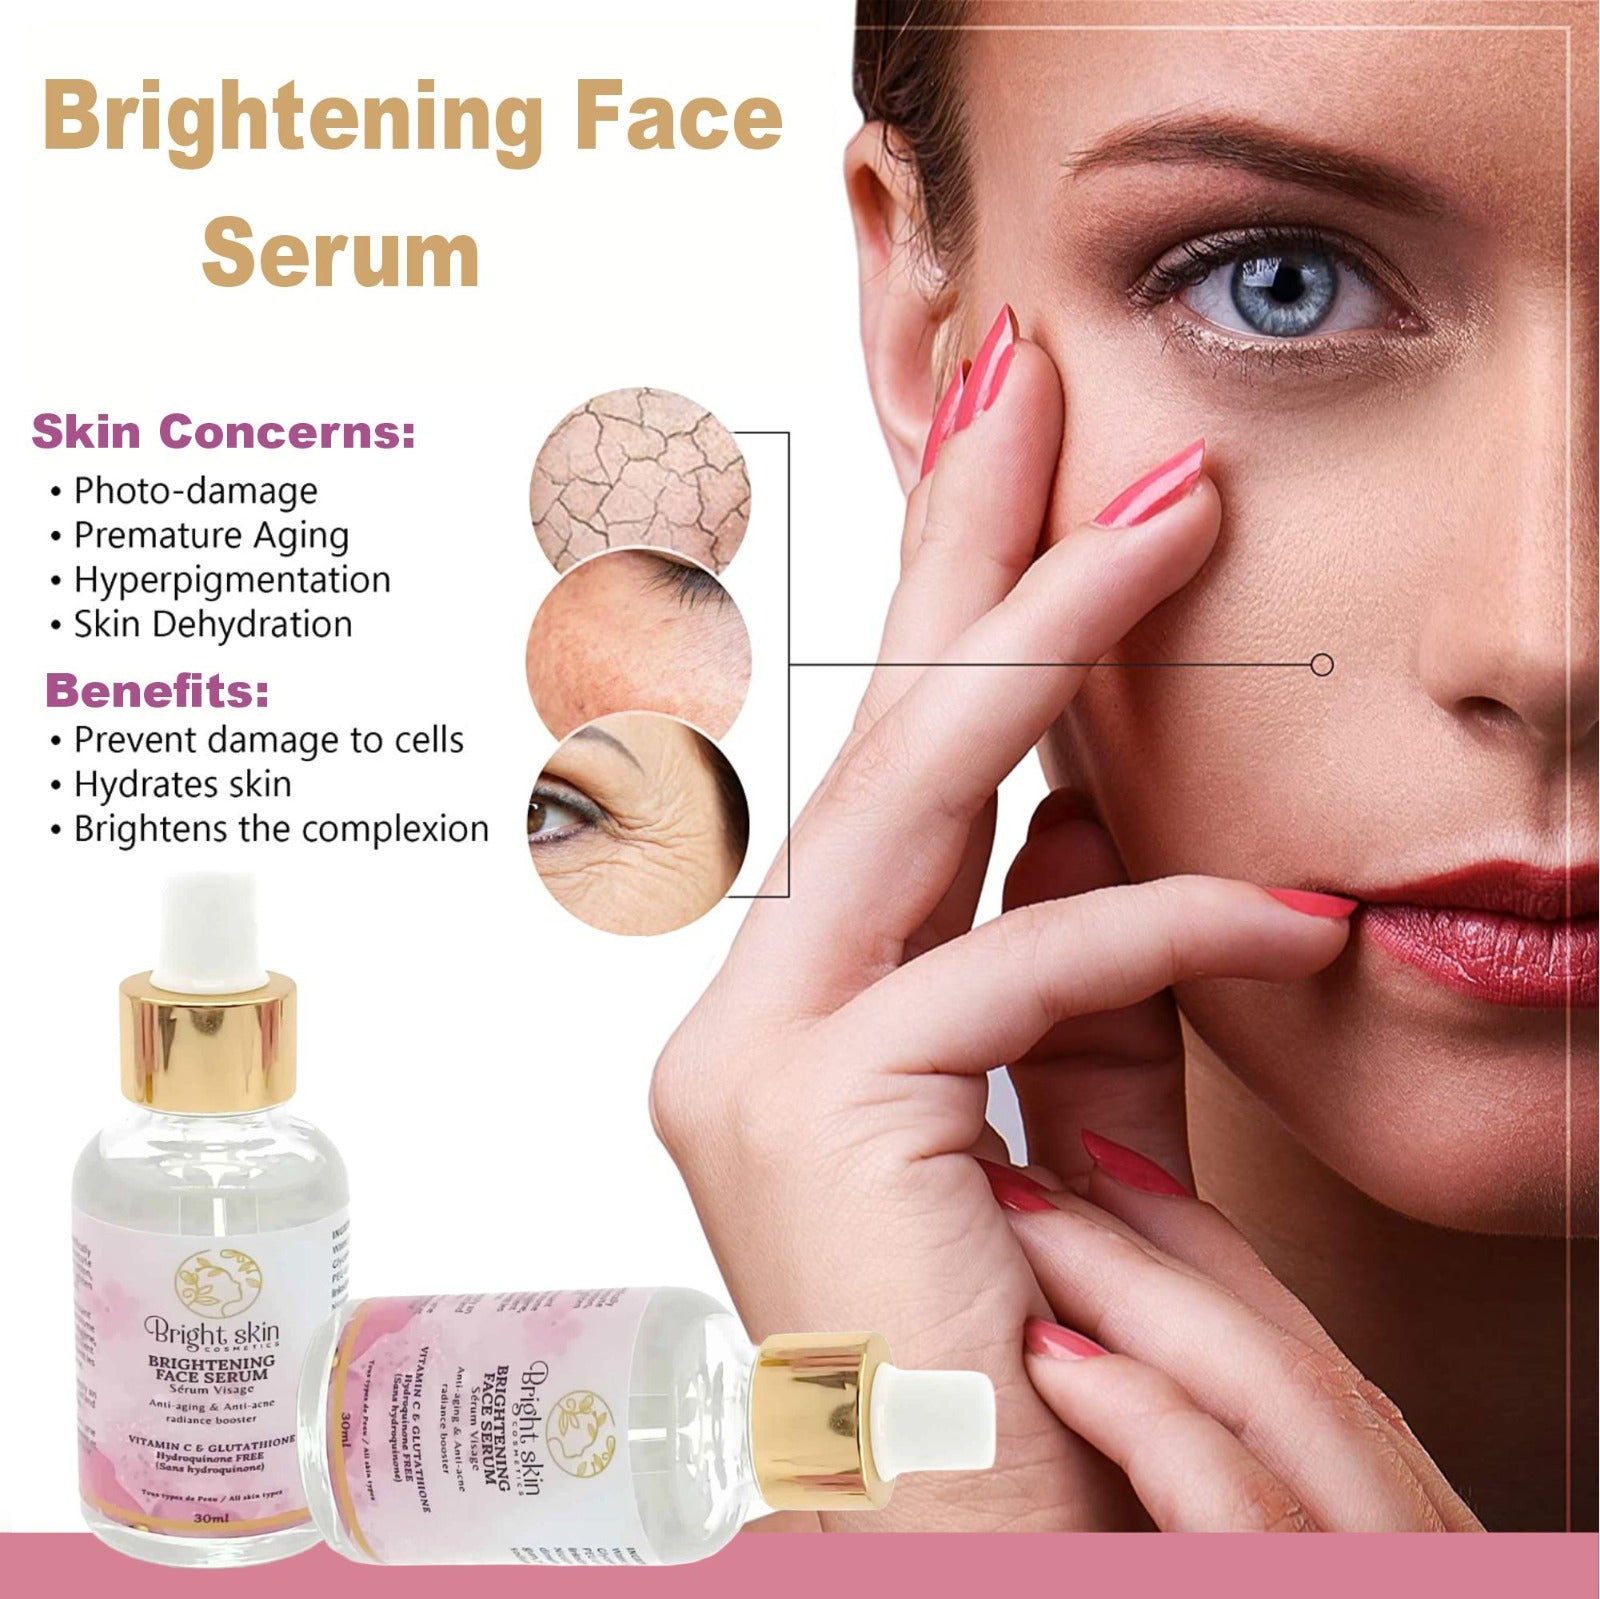 Brightening Face Serum